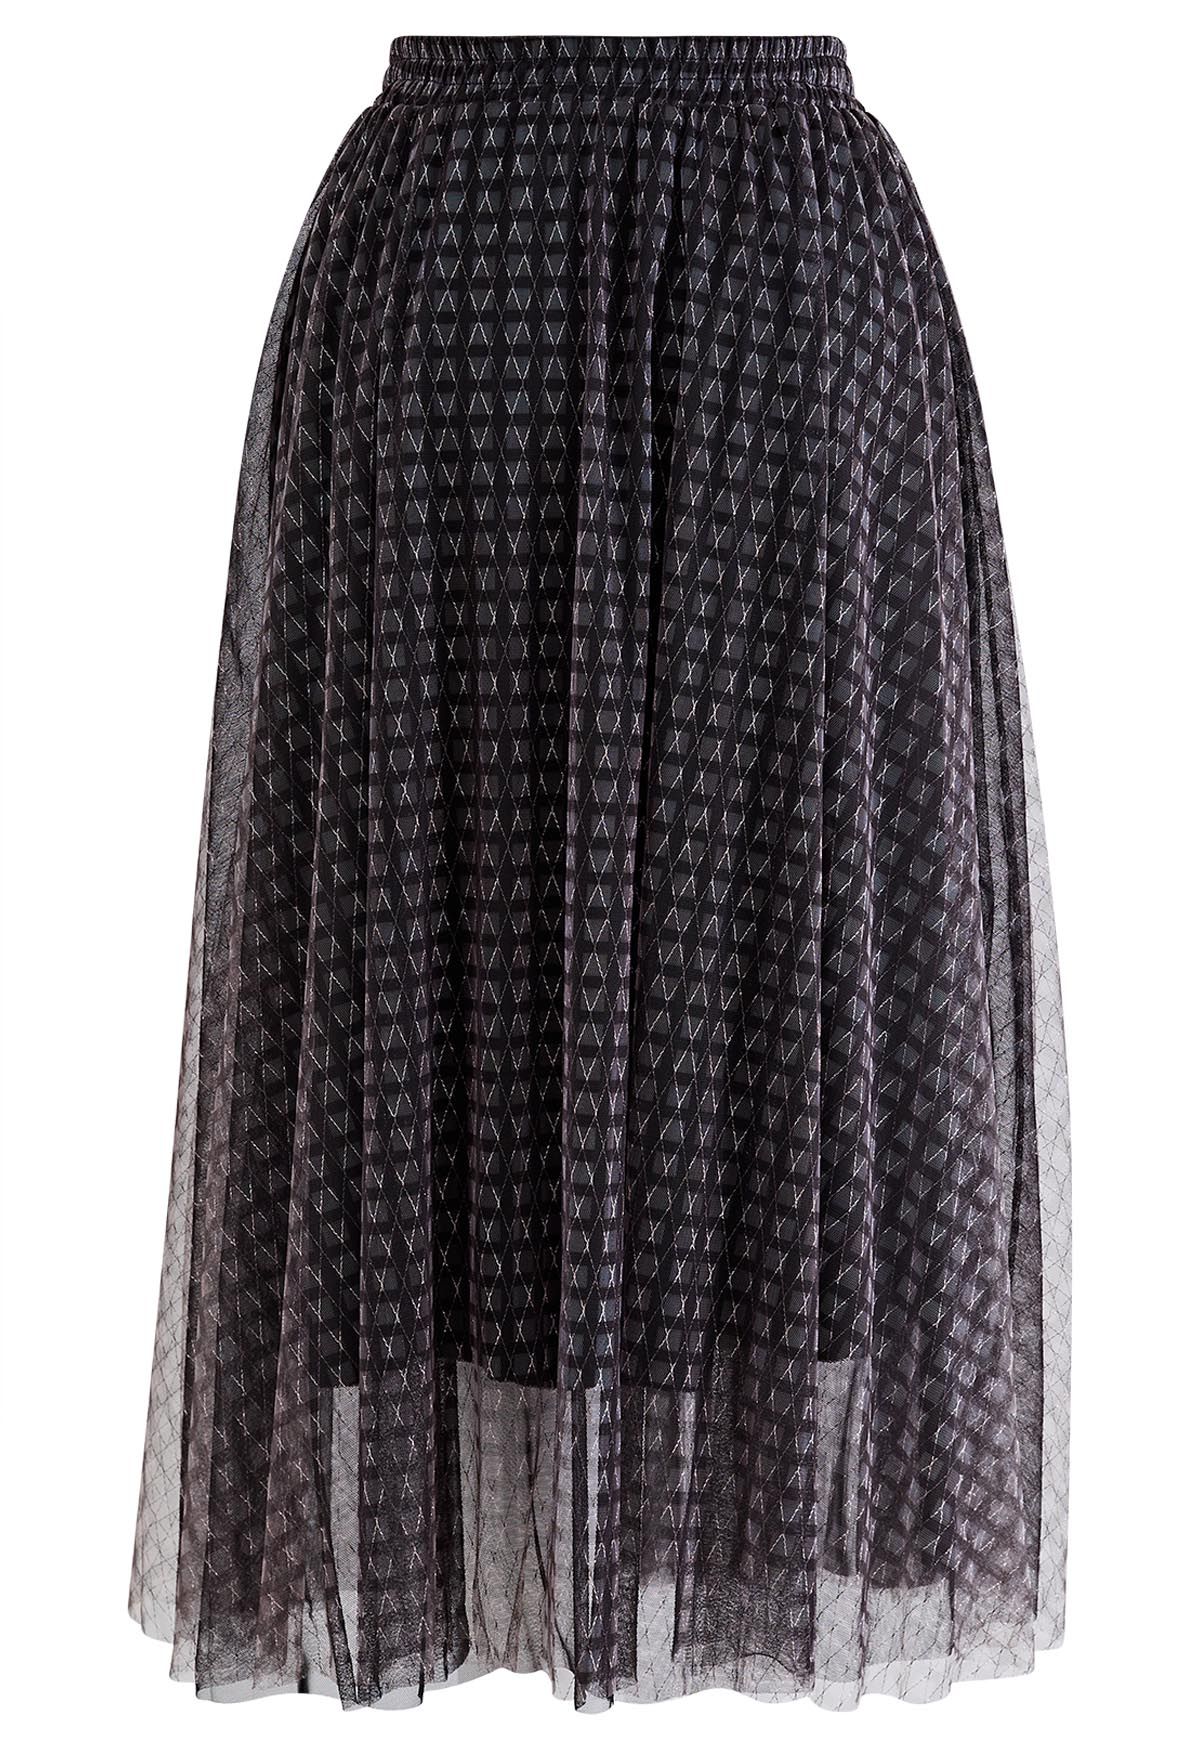 Metallic Thread Diamond-Shape Mesh Tulle Skirt in Black - Retro, Indie ...